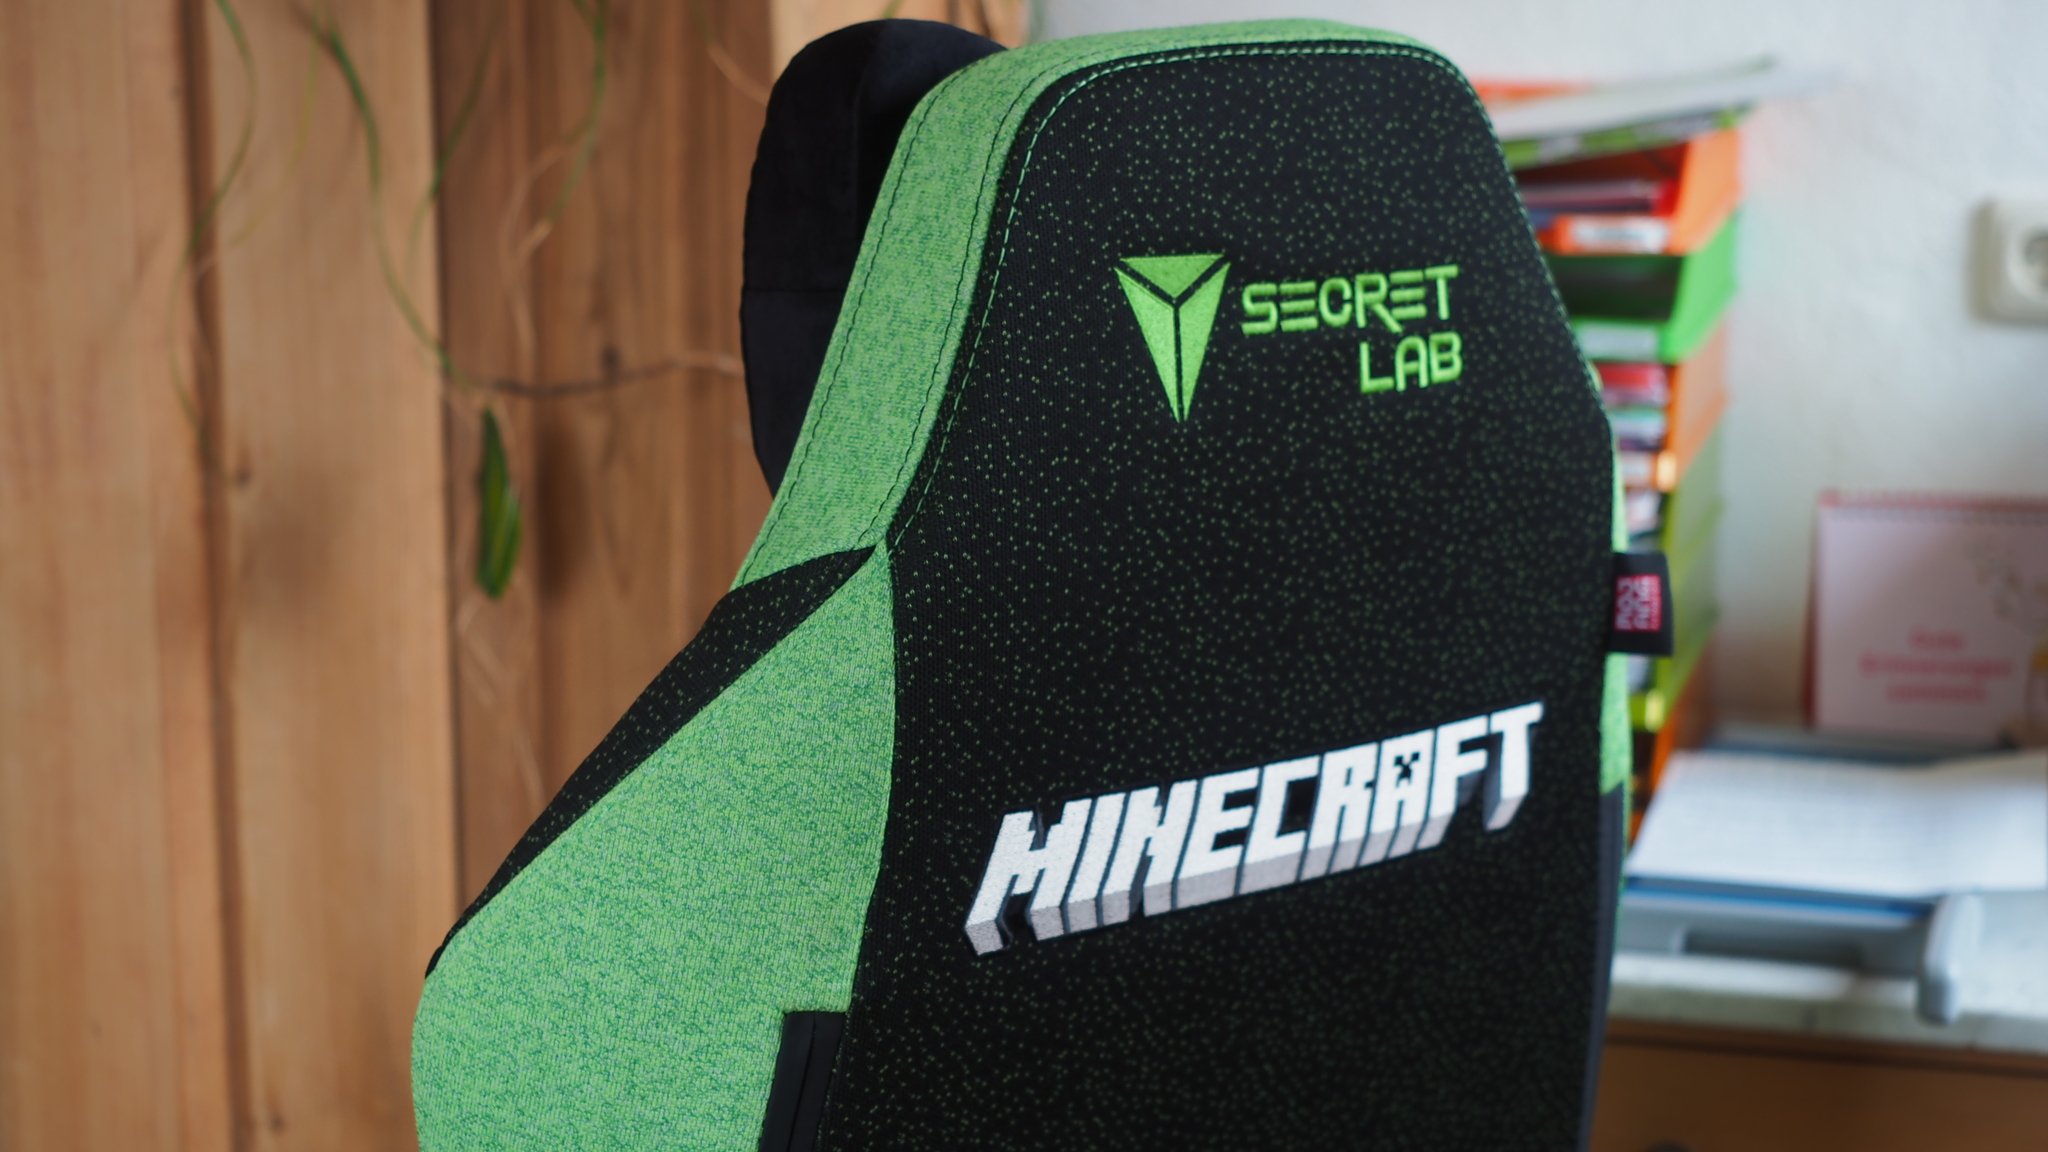 Secretlab Titan Evo 2022 Minecraft Chair Review